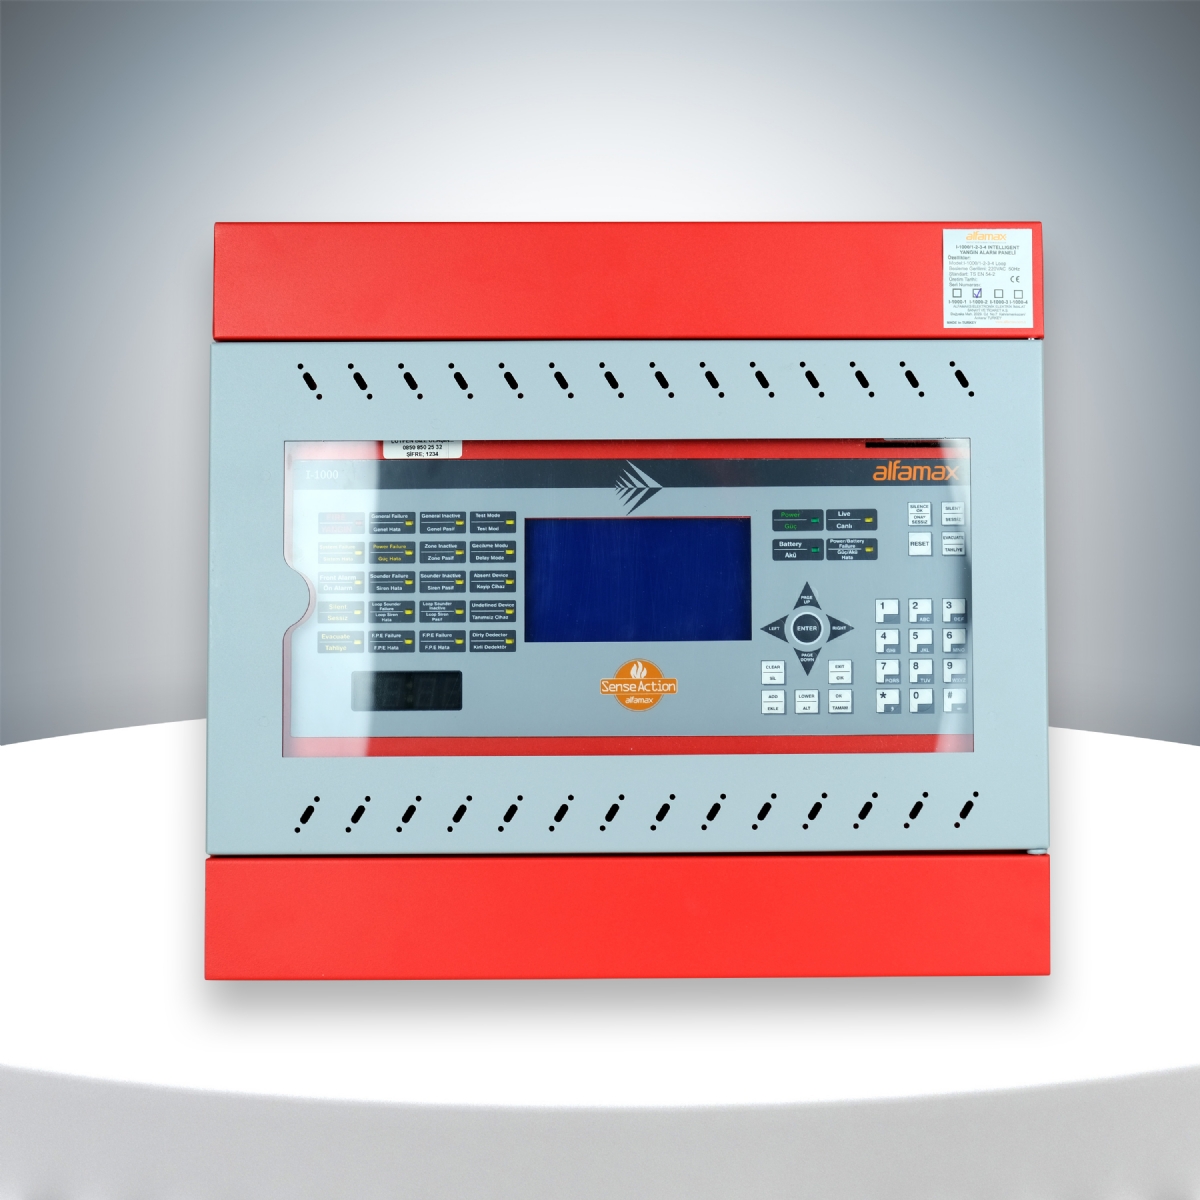 I-1000-4 1 Loop Addressable Fire Alarm Panel